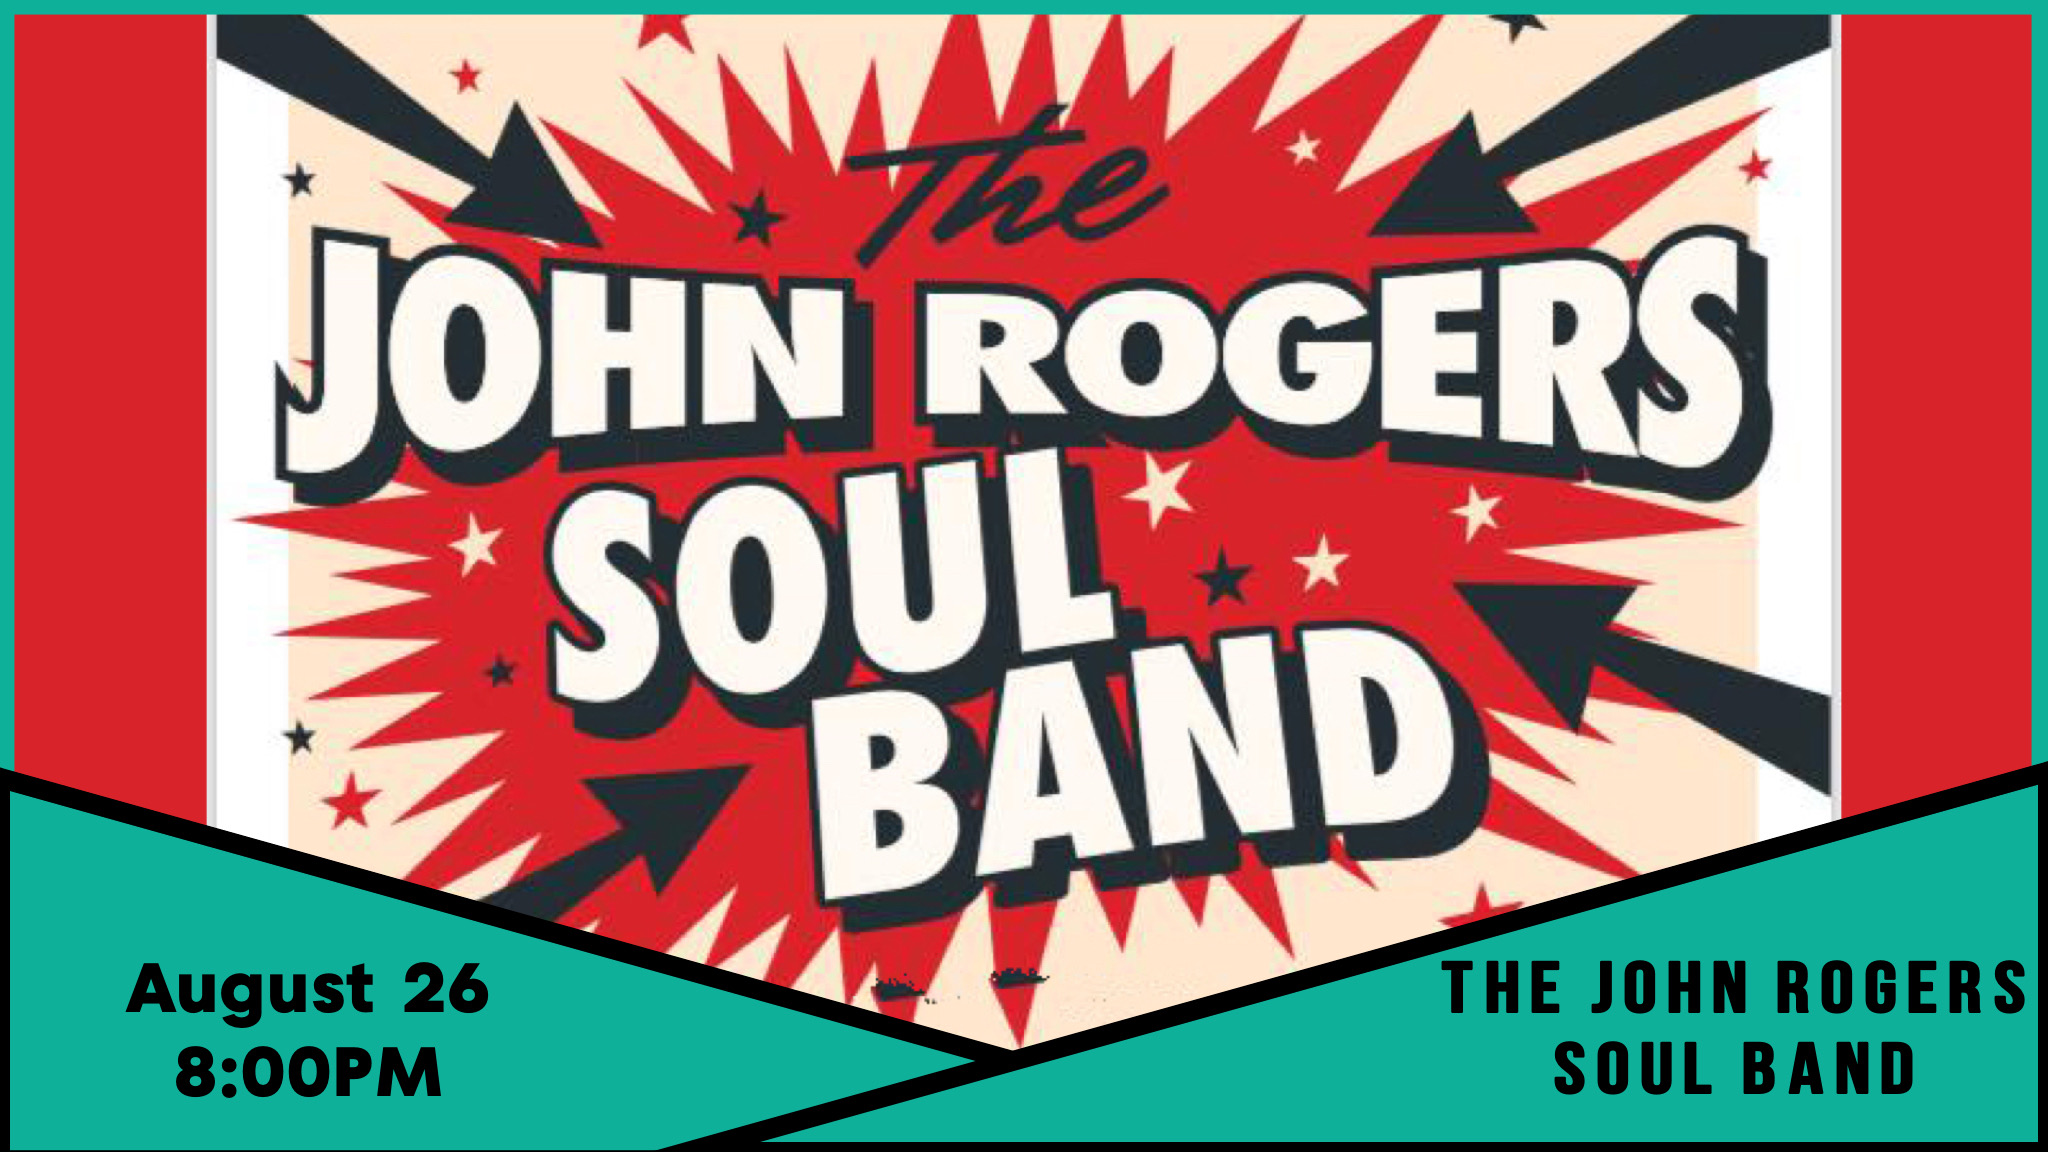 The John Rogers Soul Band